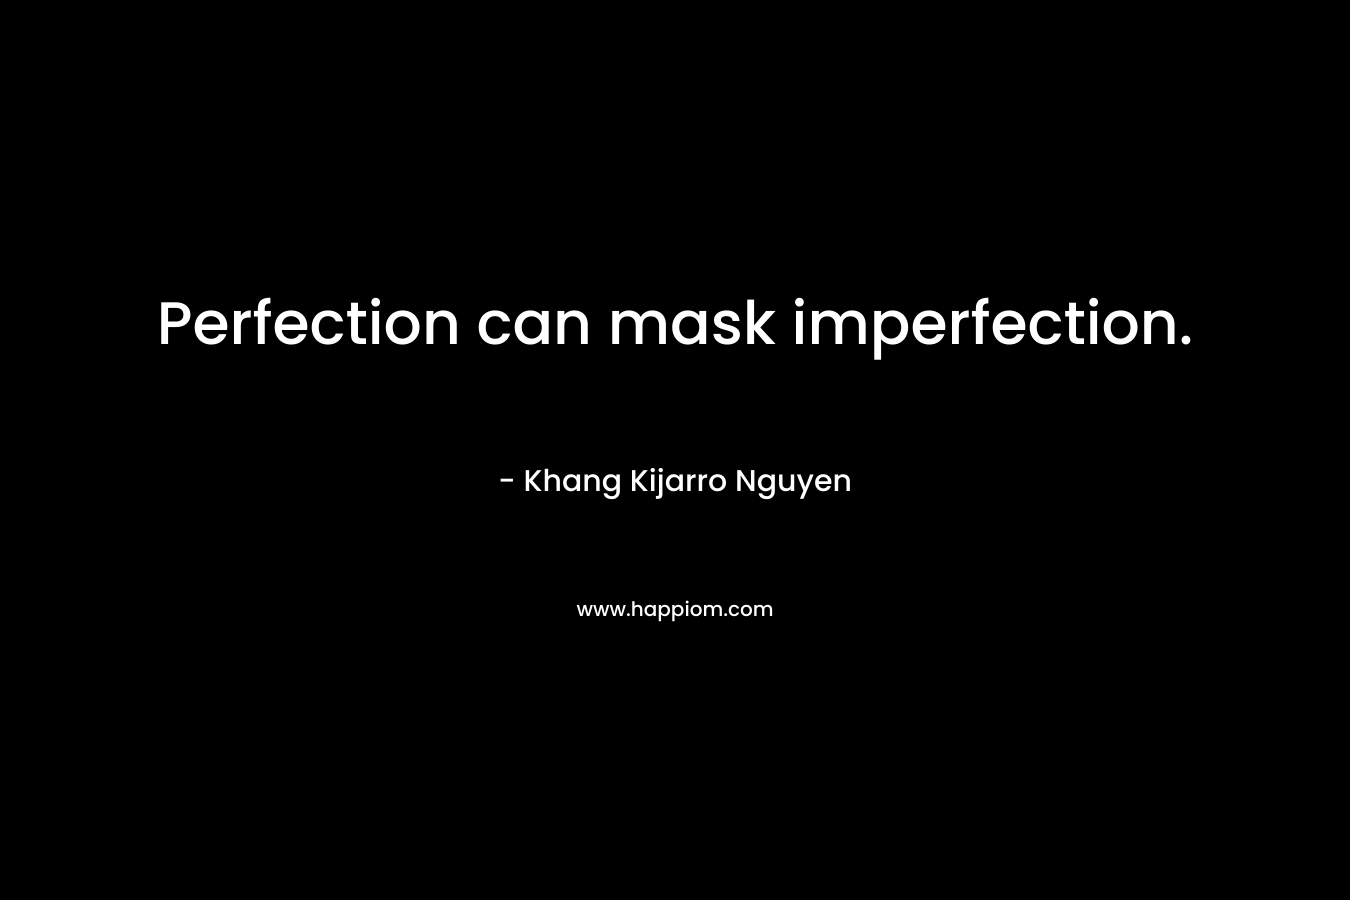 Perfection can mask imperfection. – Khang Kijarro Nguyen